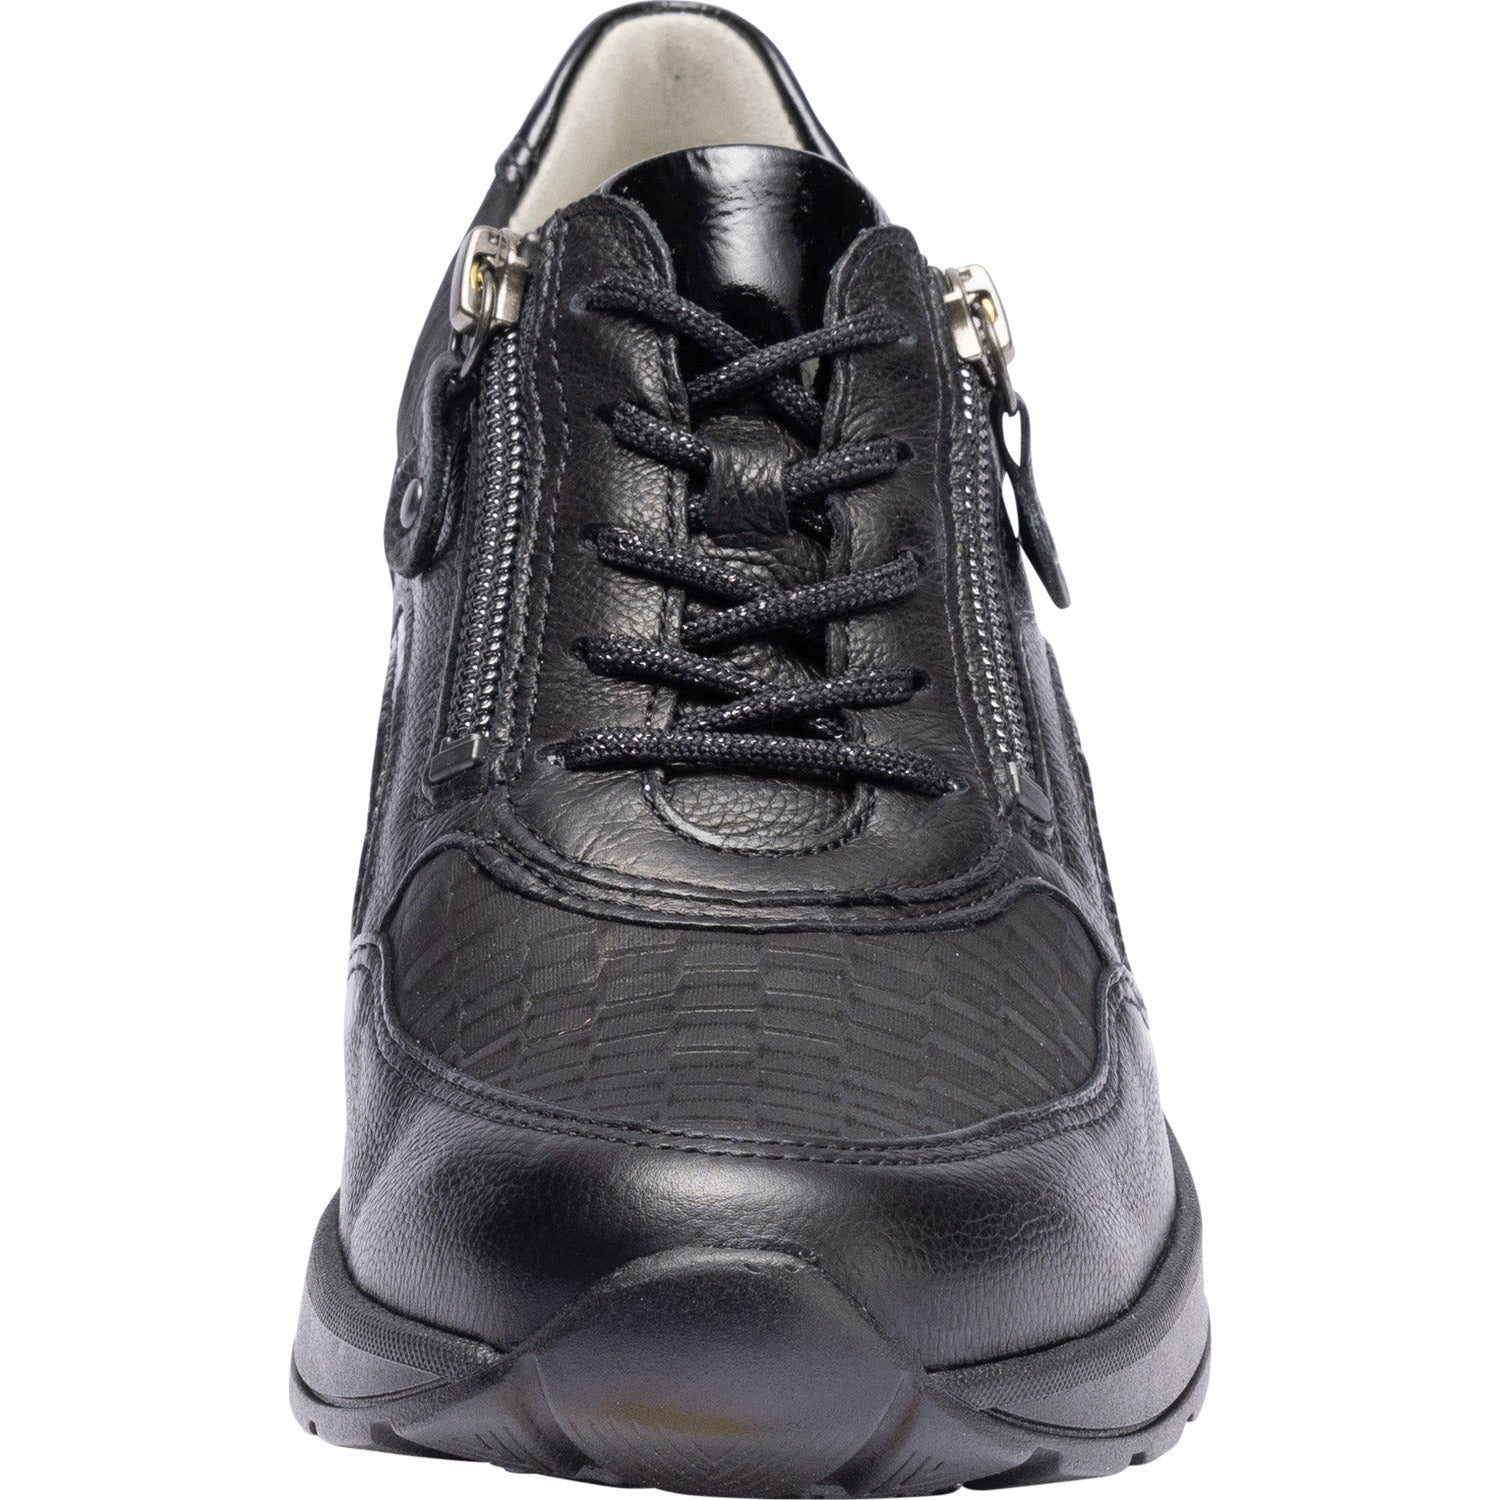 Waldlaufer Clara(939011)- Ladies Lace Wedge Shoe  With Double  Zip in Black.Waldlaufer  | Wide Fit Shoes | Wisemans | Bantry | West Cork | Ireland